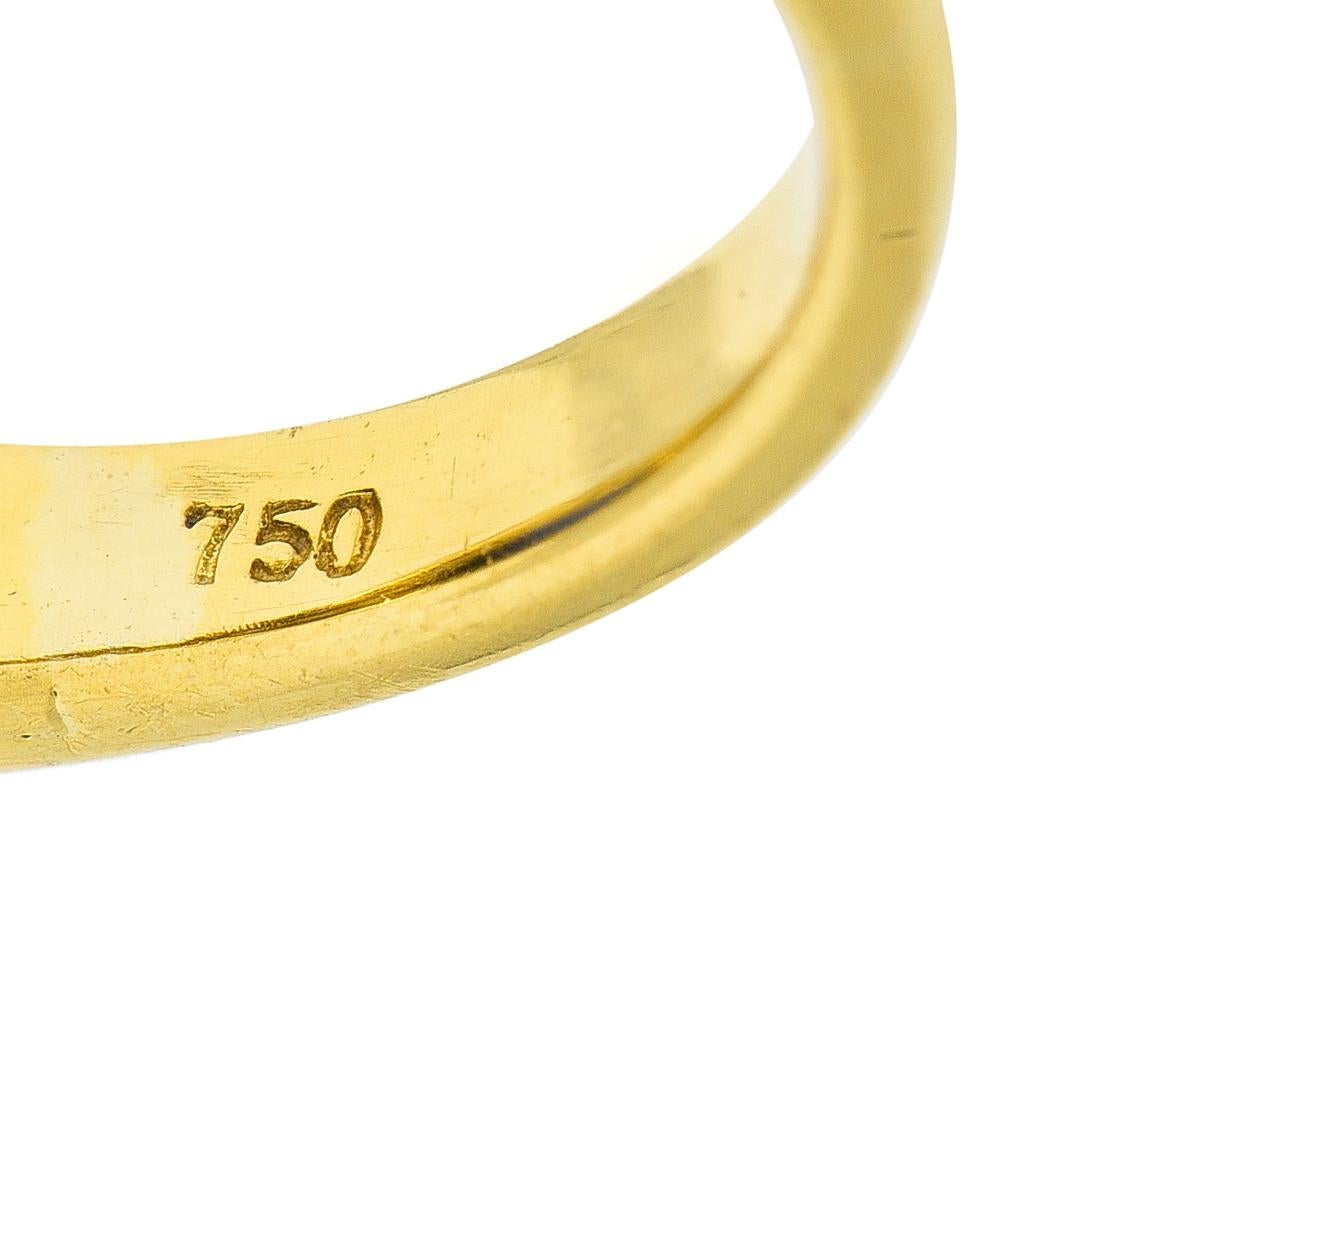 Vintage 5.71 Carats Ceylon Sapphire Diamond 18 Karat Two-Tone Gold Gemstone Ring 2